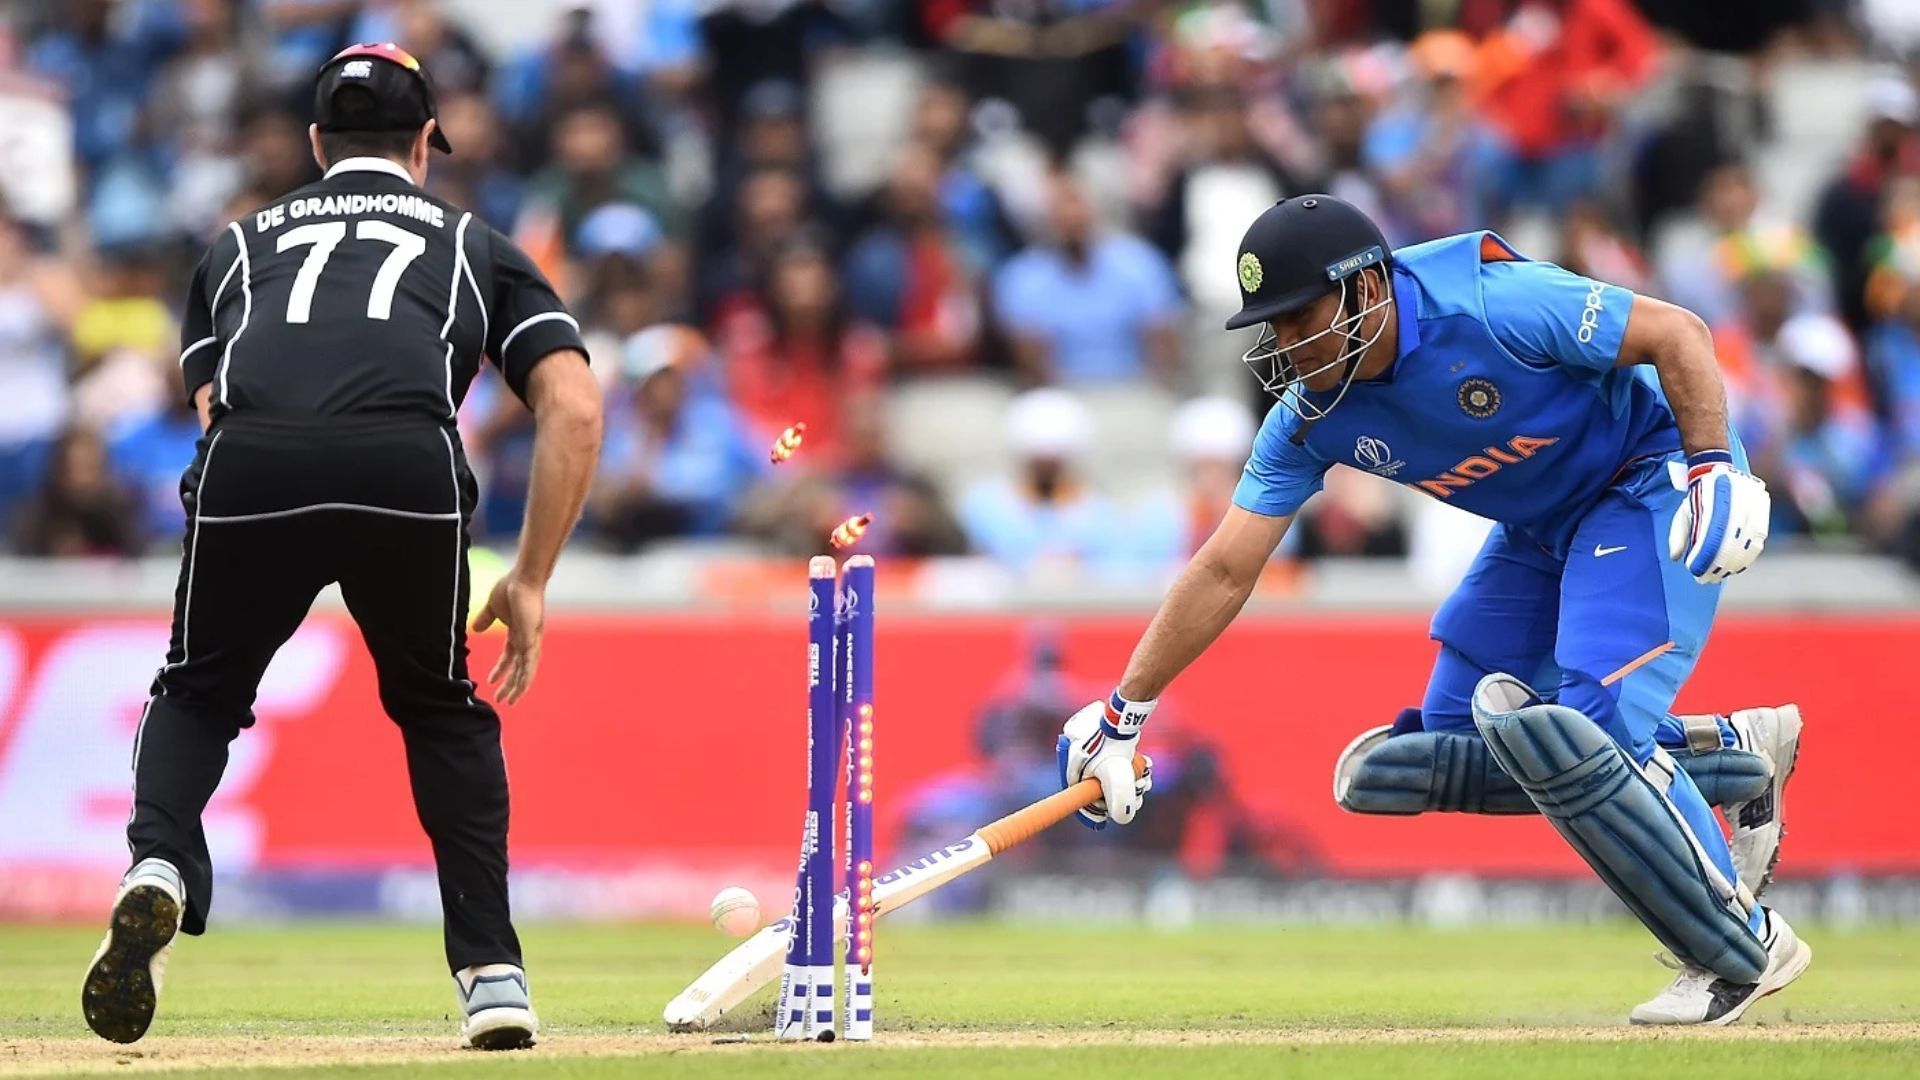 The 2019 semi-final defeat still haunts many Indian fans. (Image Courtesy: espncricinfo.com)